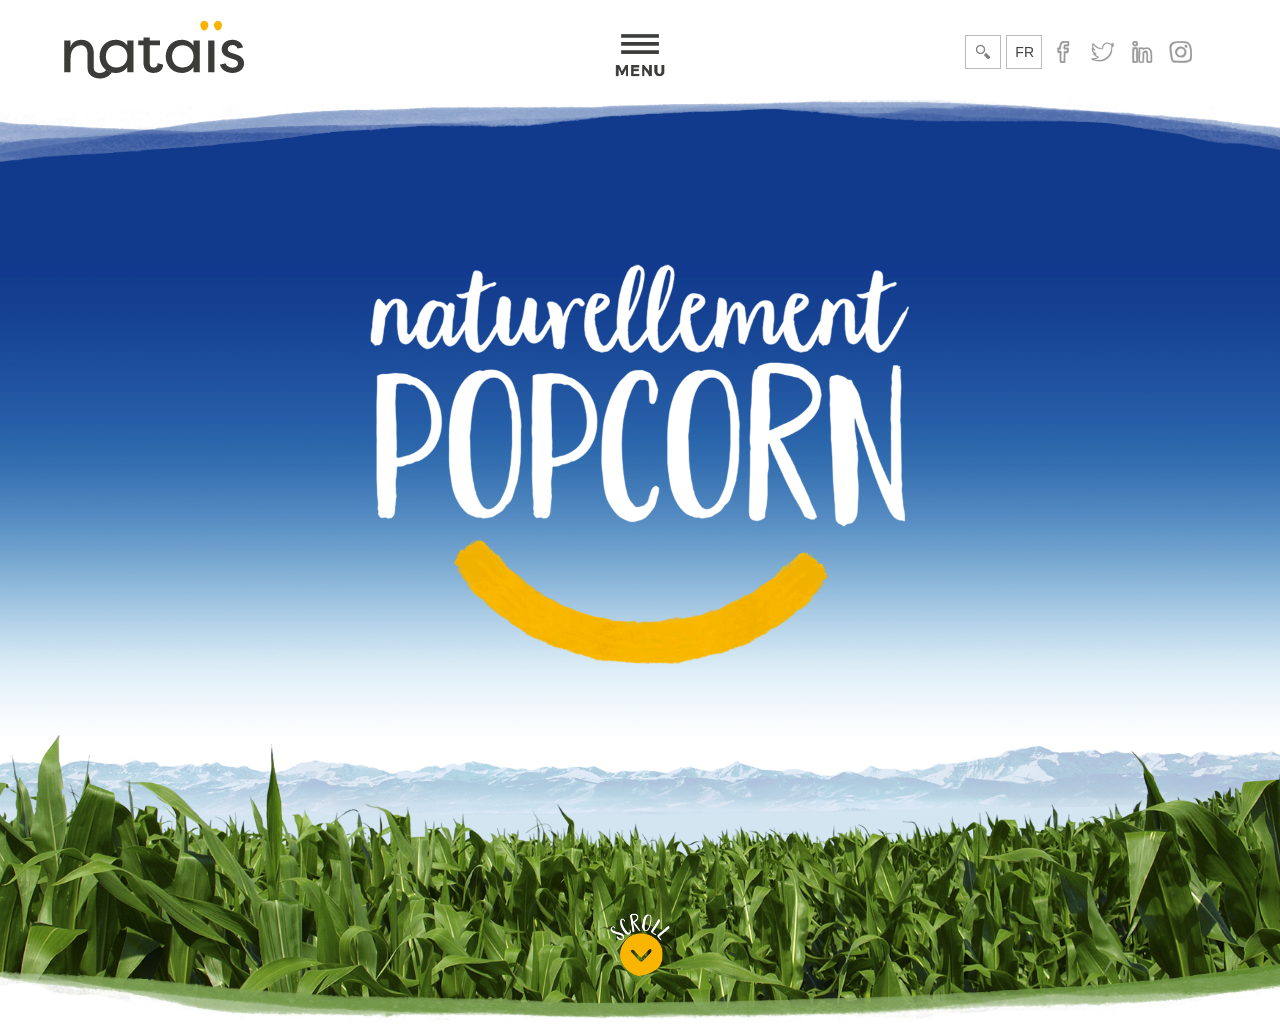 www.popcorn.fr